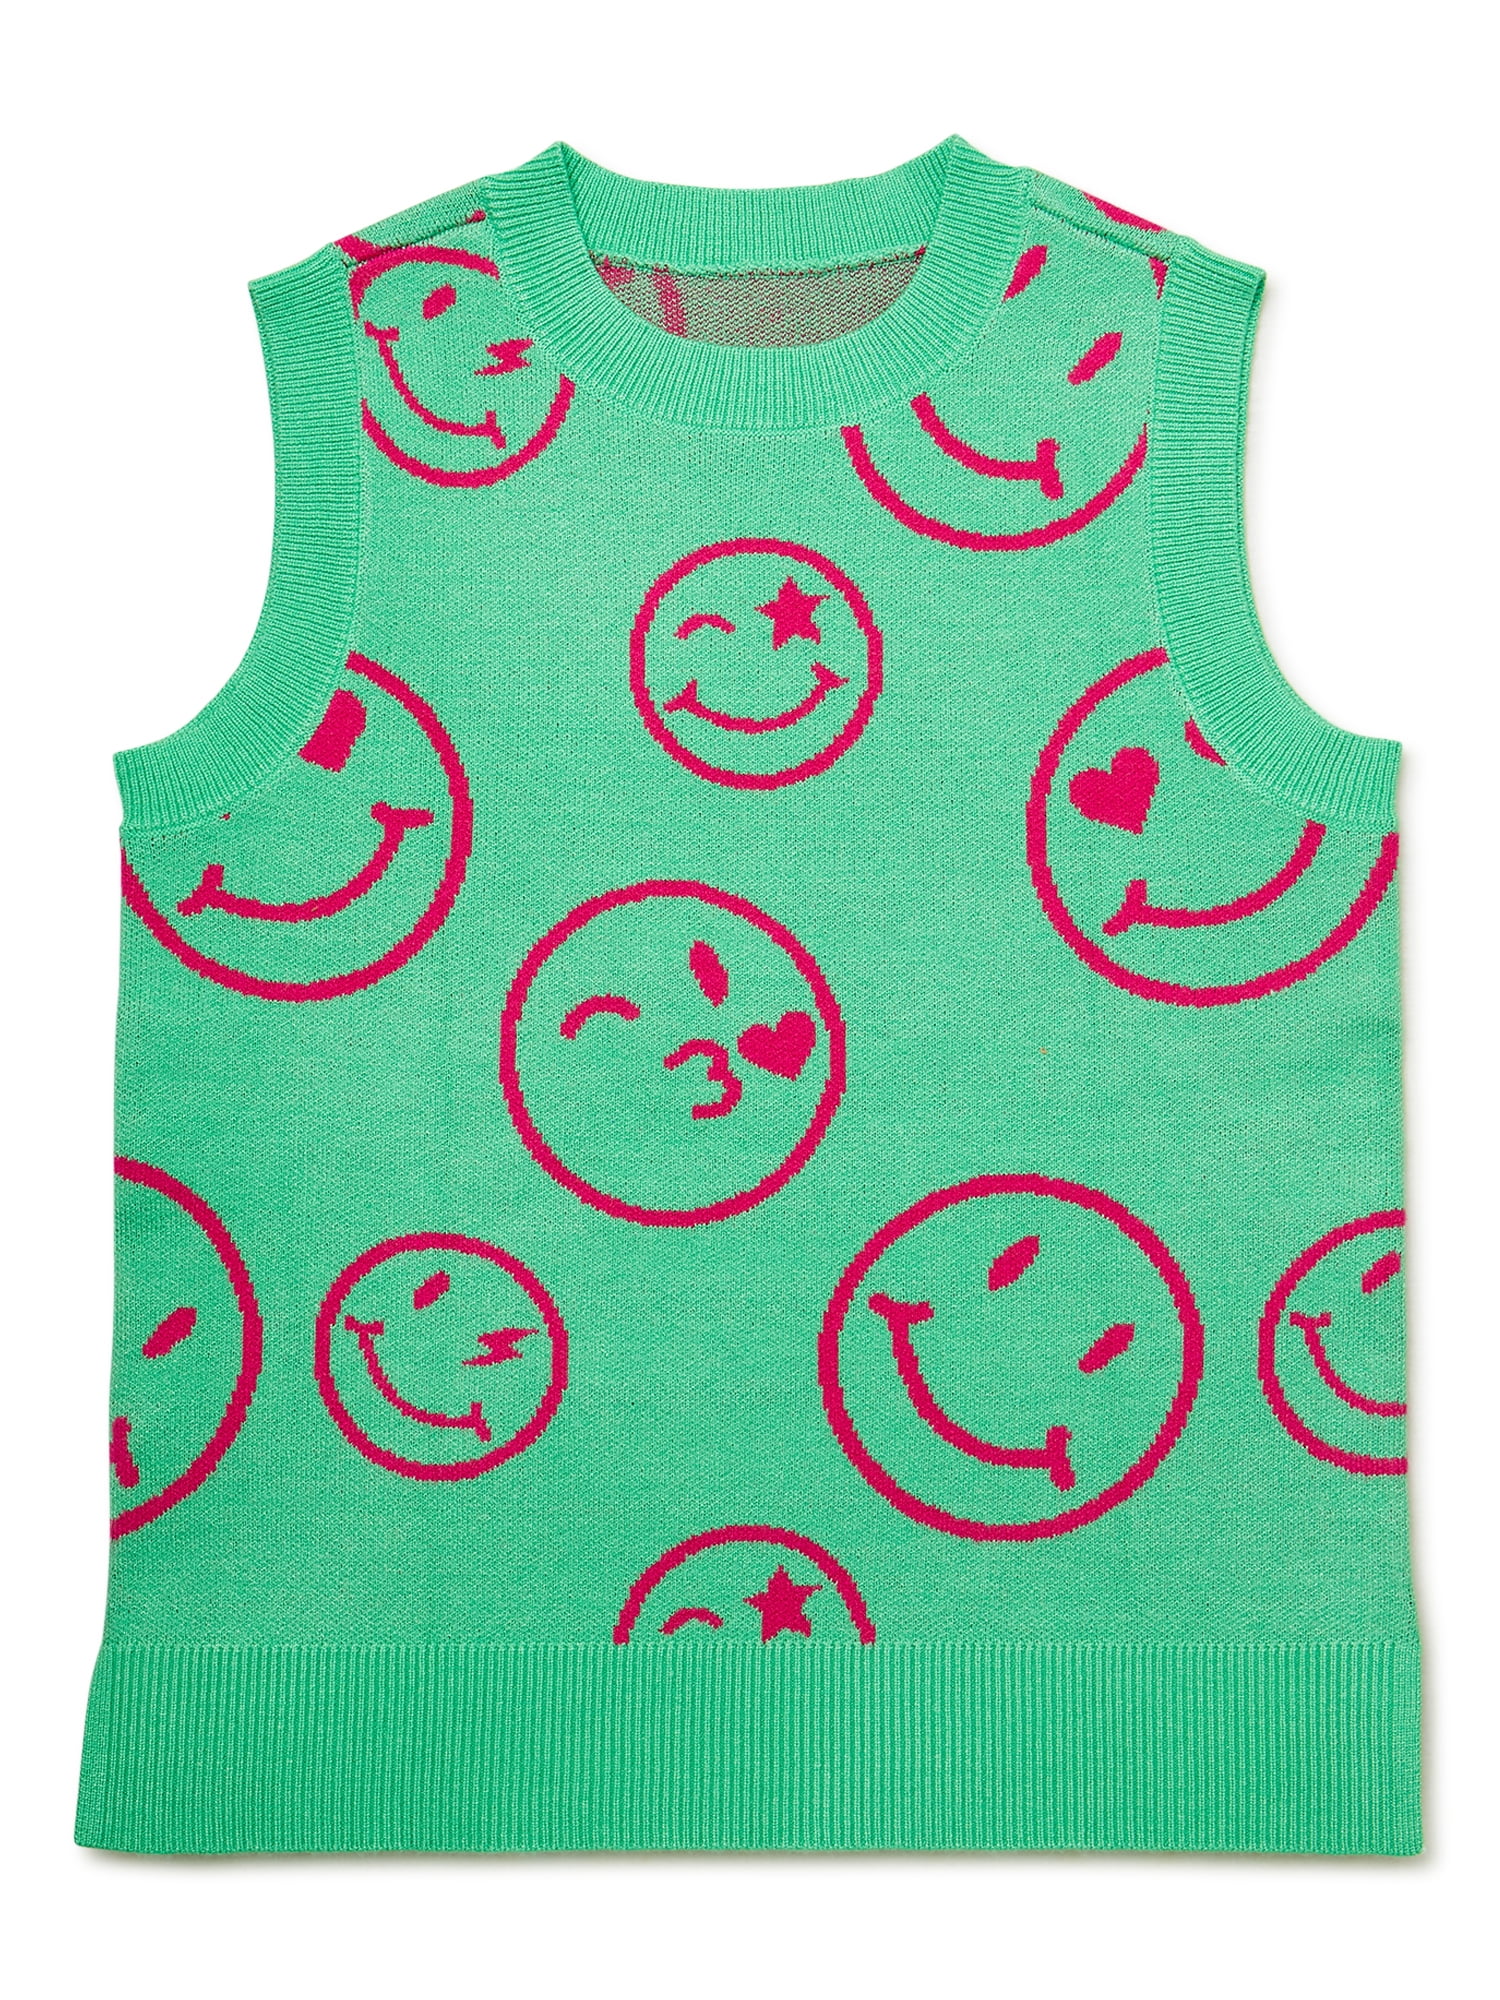 Nik and Leksi Girls Smiley Sweater Vest, Sizes 4-16